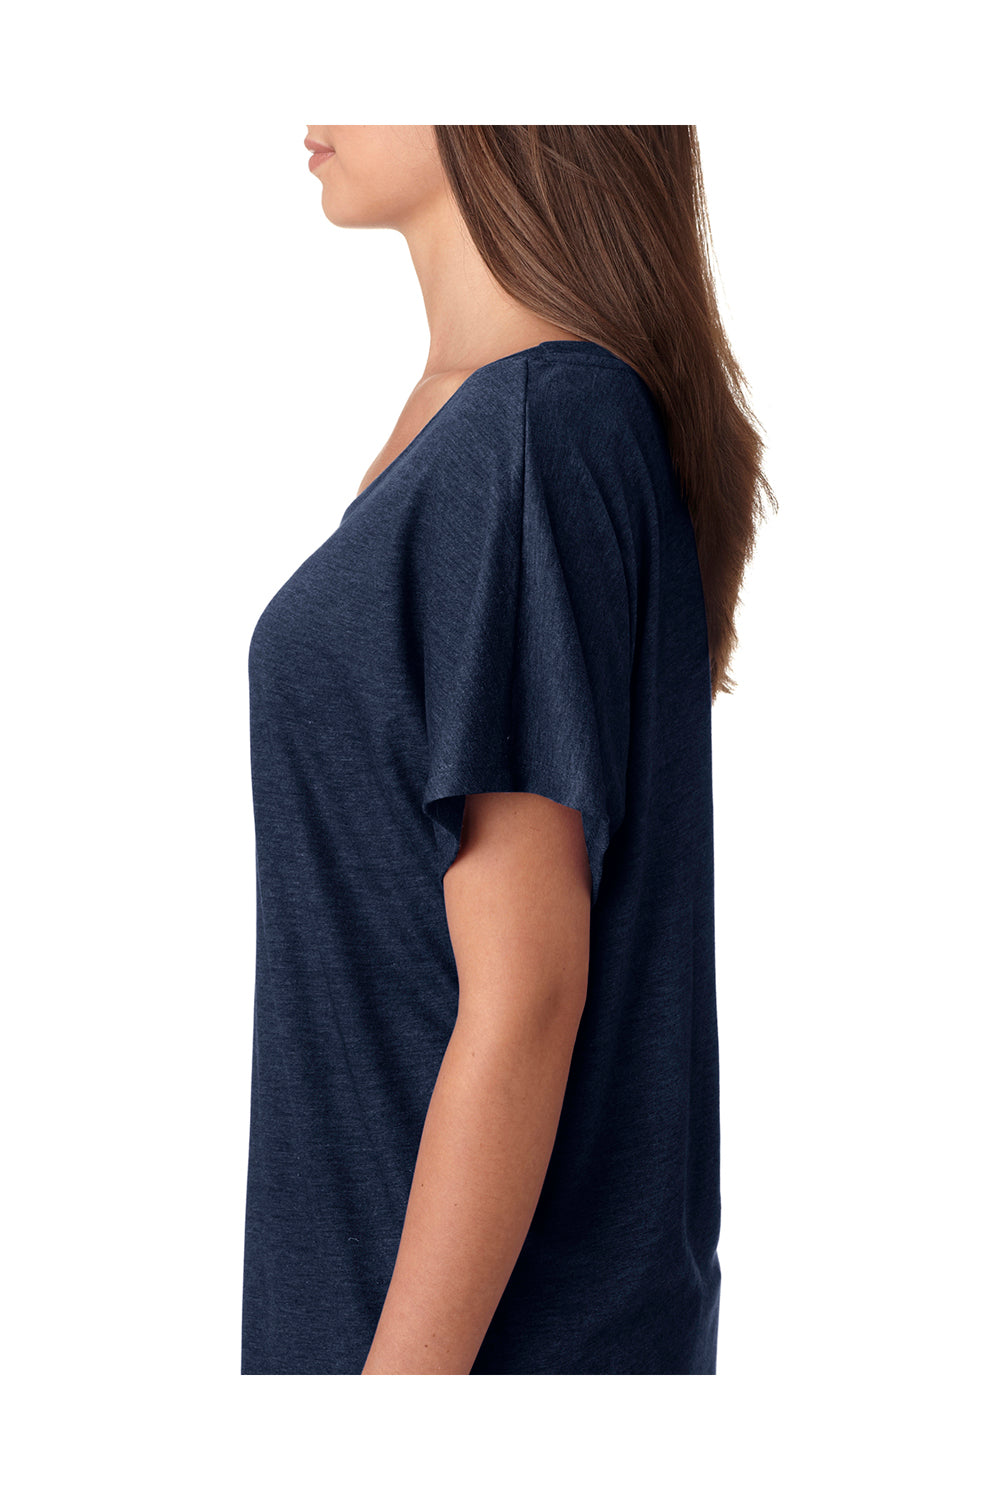 Next Level 6760 Womens Dolman Jersey Short Sleeve Scoop Neck T-Shirt Navy Blue Side